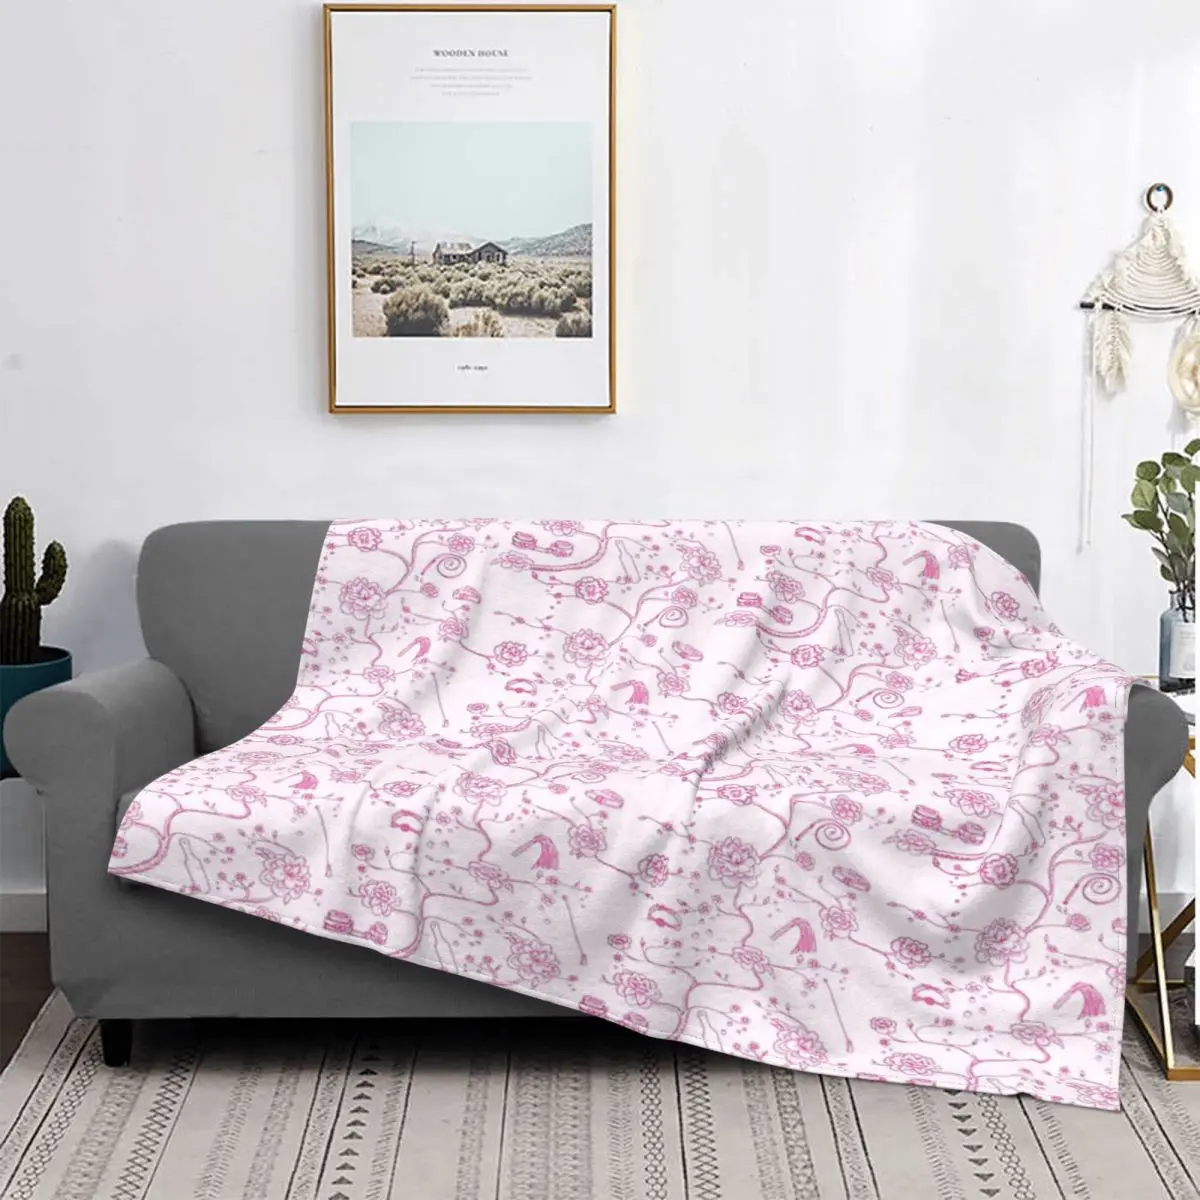 

S & M холщовое одеяло, покрывало для кровати, пледы, полотенце, пляжное одеяло для пикника, плед на диван